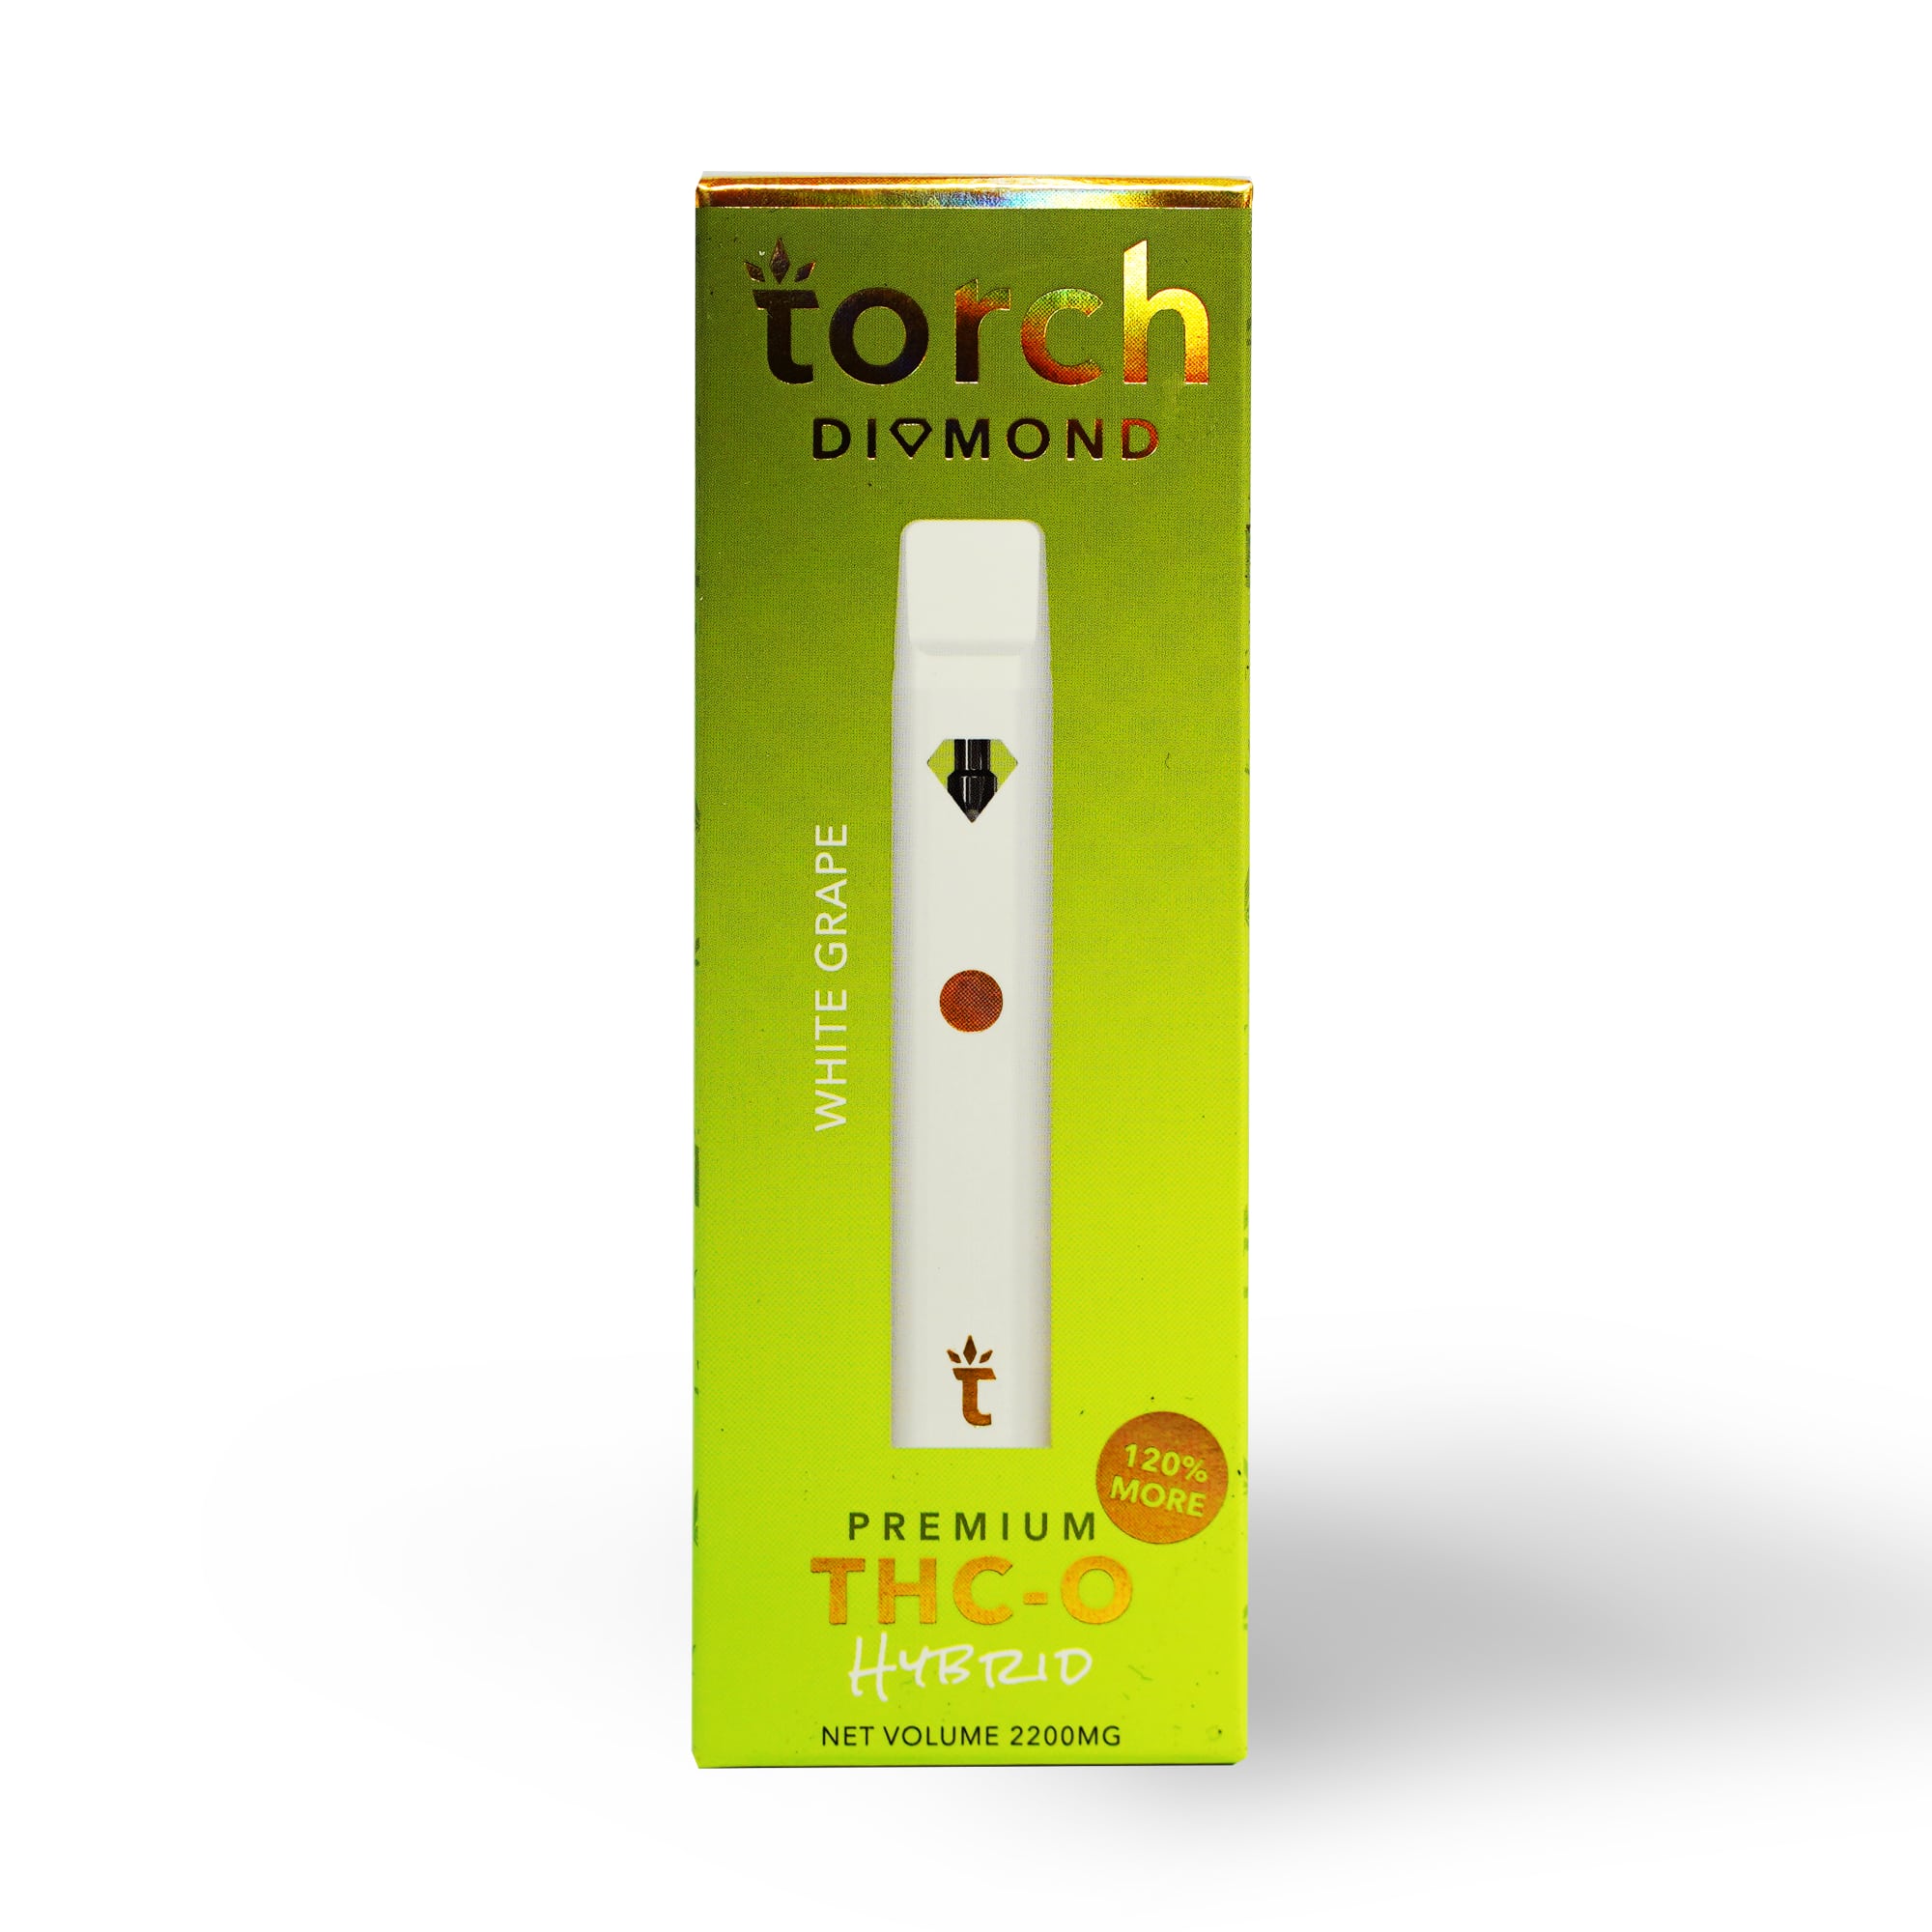 Torch Diamond White Grape THC-O + Delta 8 Disposable (2.2g) Best Price